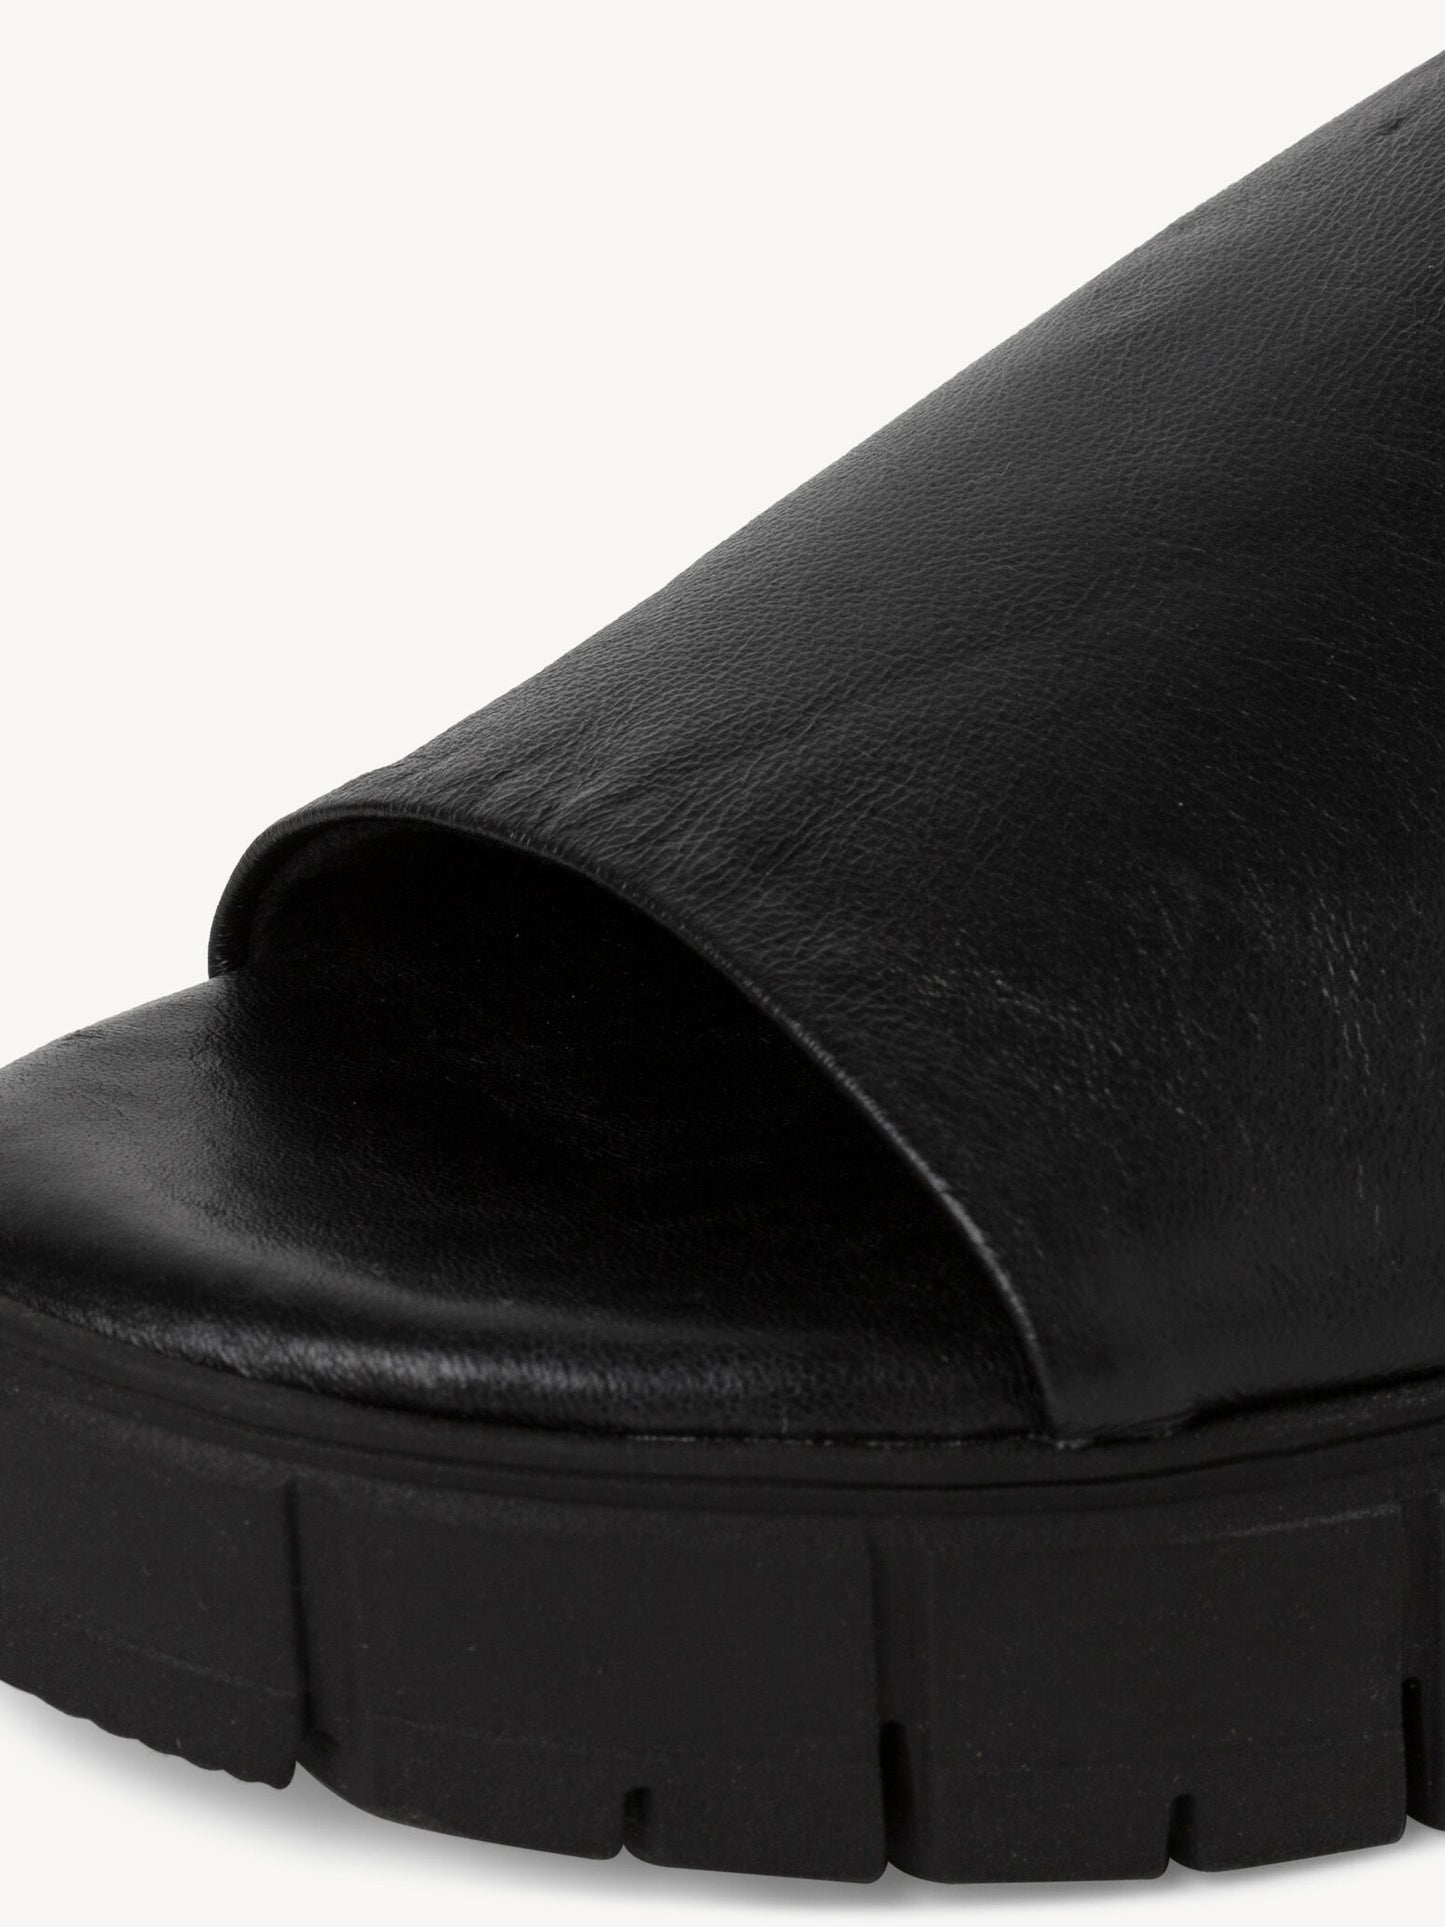 Tamaris ultra soft black leather mule